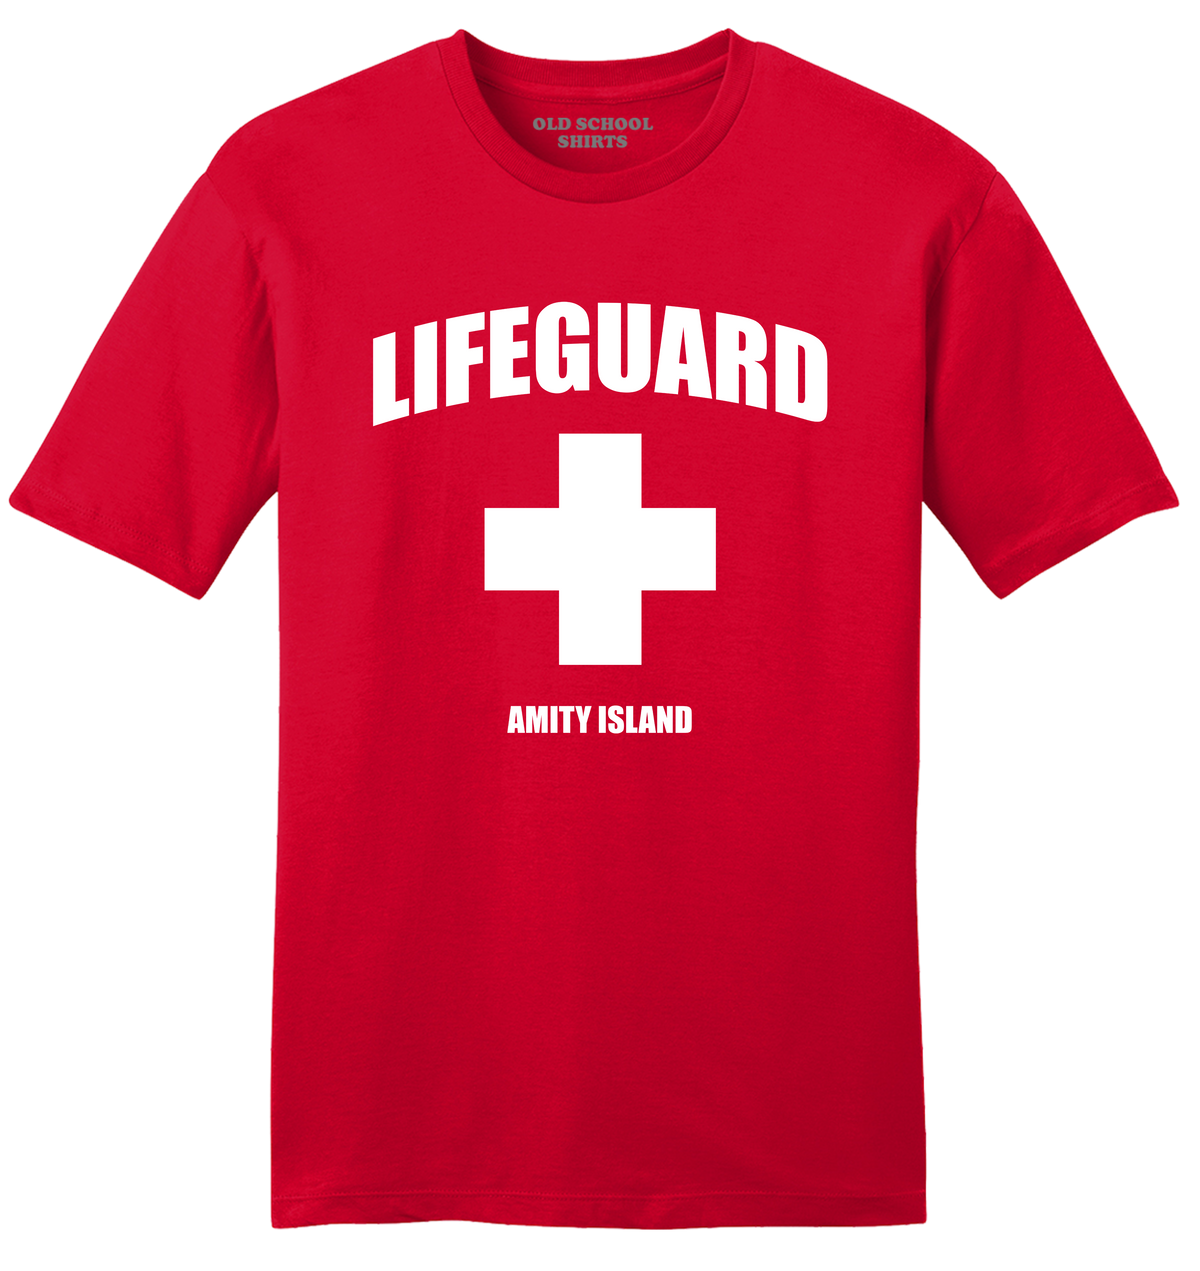 Amity Island Lifeguard T-shirt red